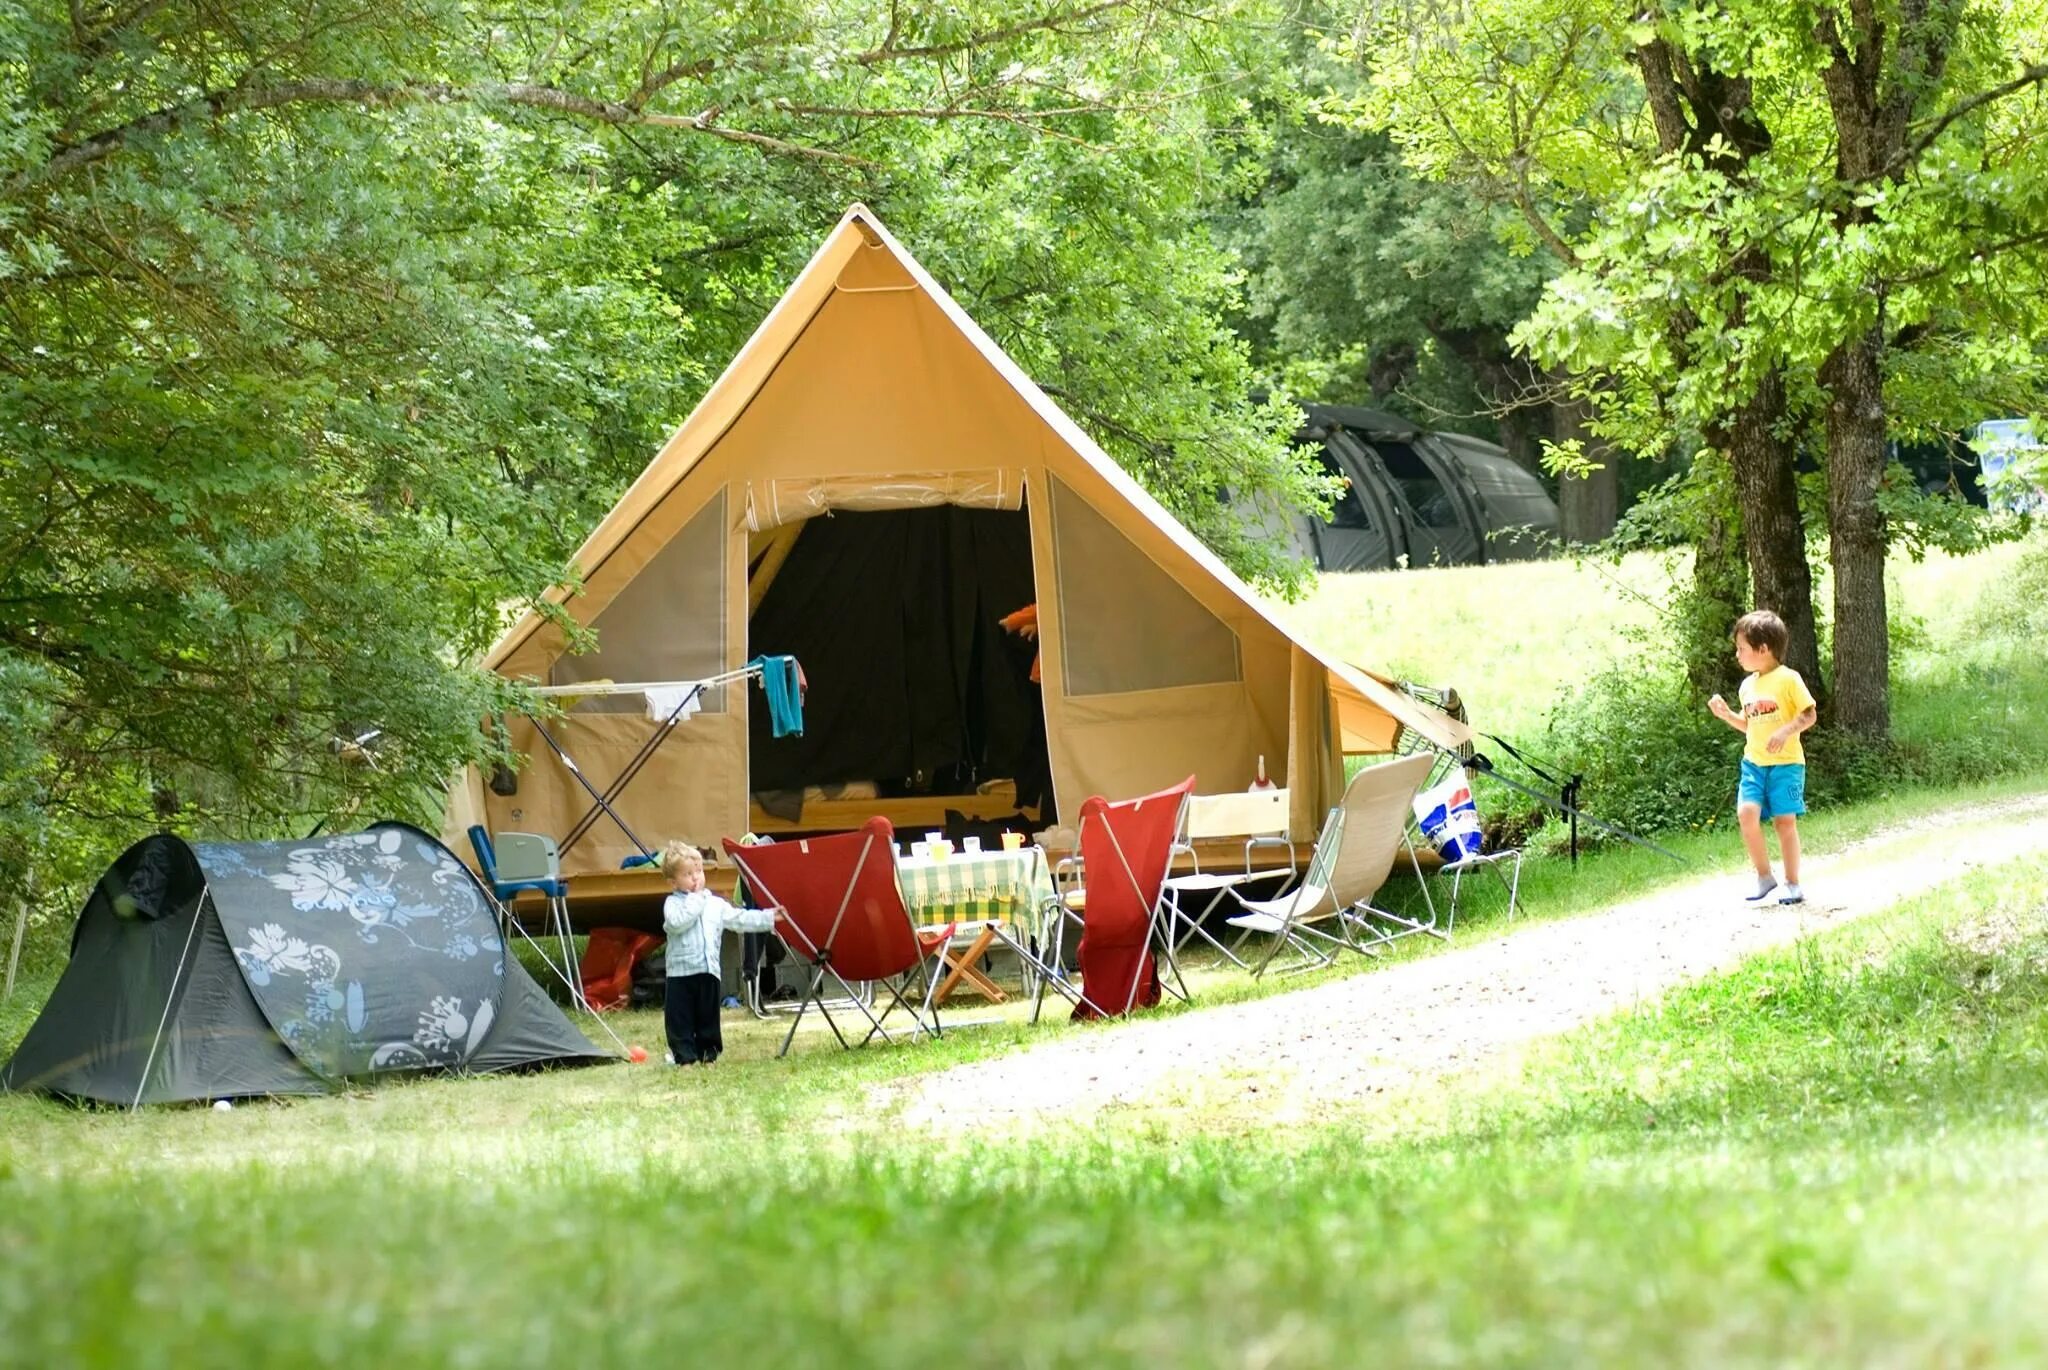 Лагерь кемпинг Молдова. Кемпинг бивуак Терскол. Alakol Camp кемпинг. Лагерь модульный (шатер и 2 палатки) Nash Base Camp. Go camping лагерь